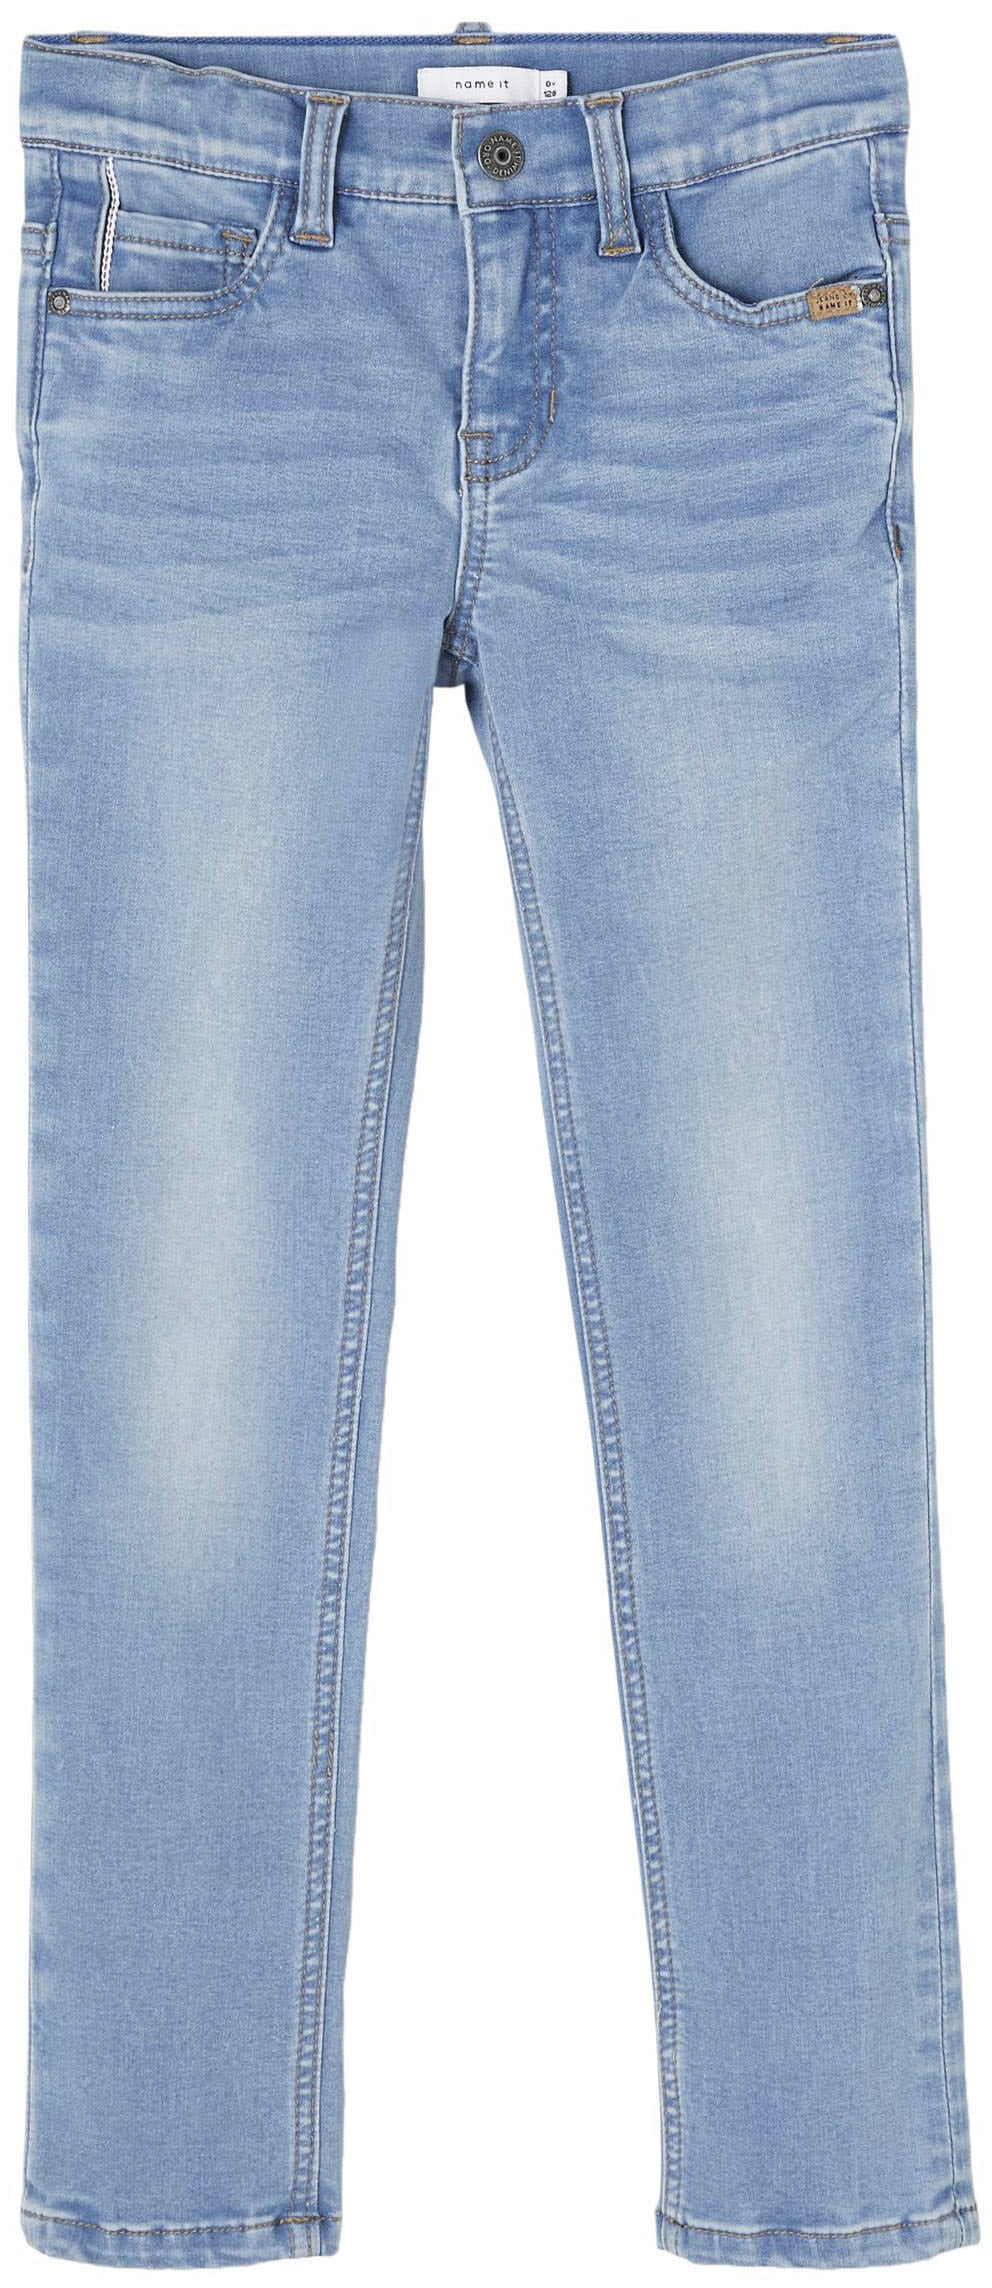 It OTTO kaufen Name Stretch-Jeans bei